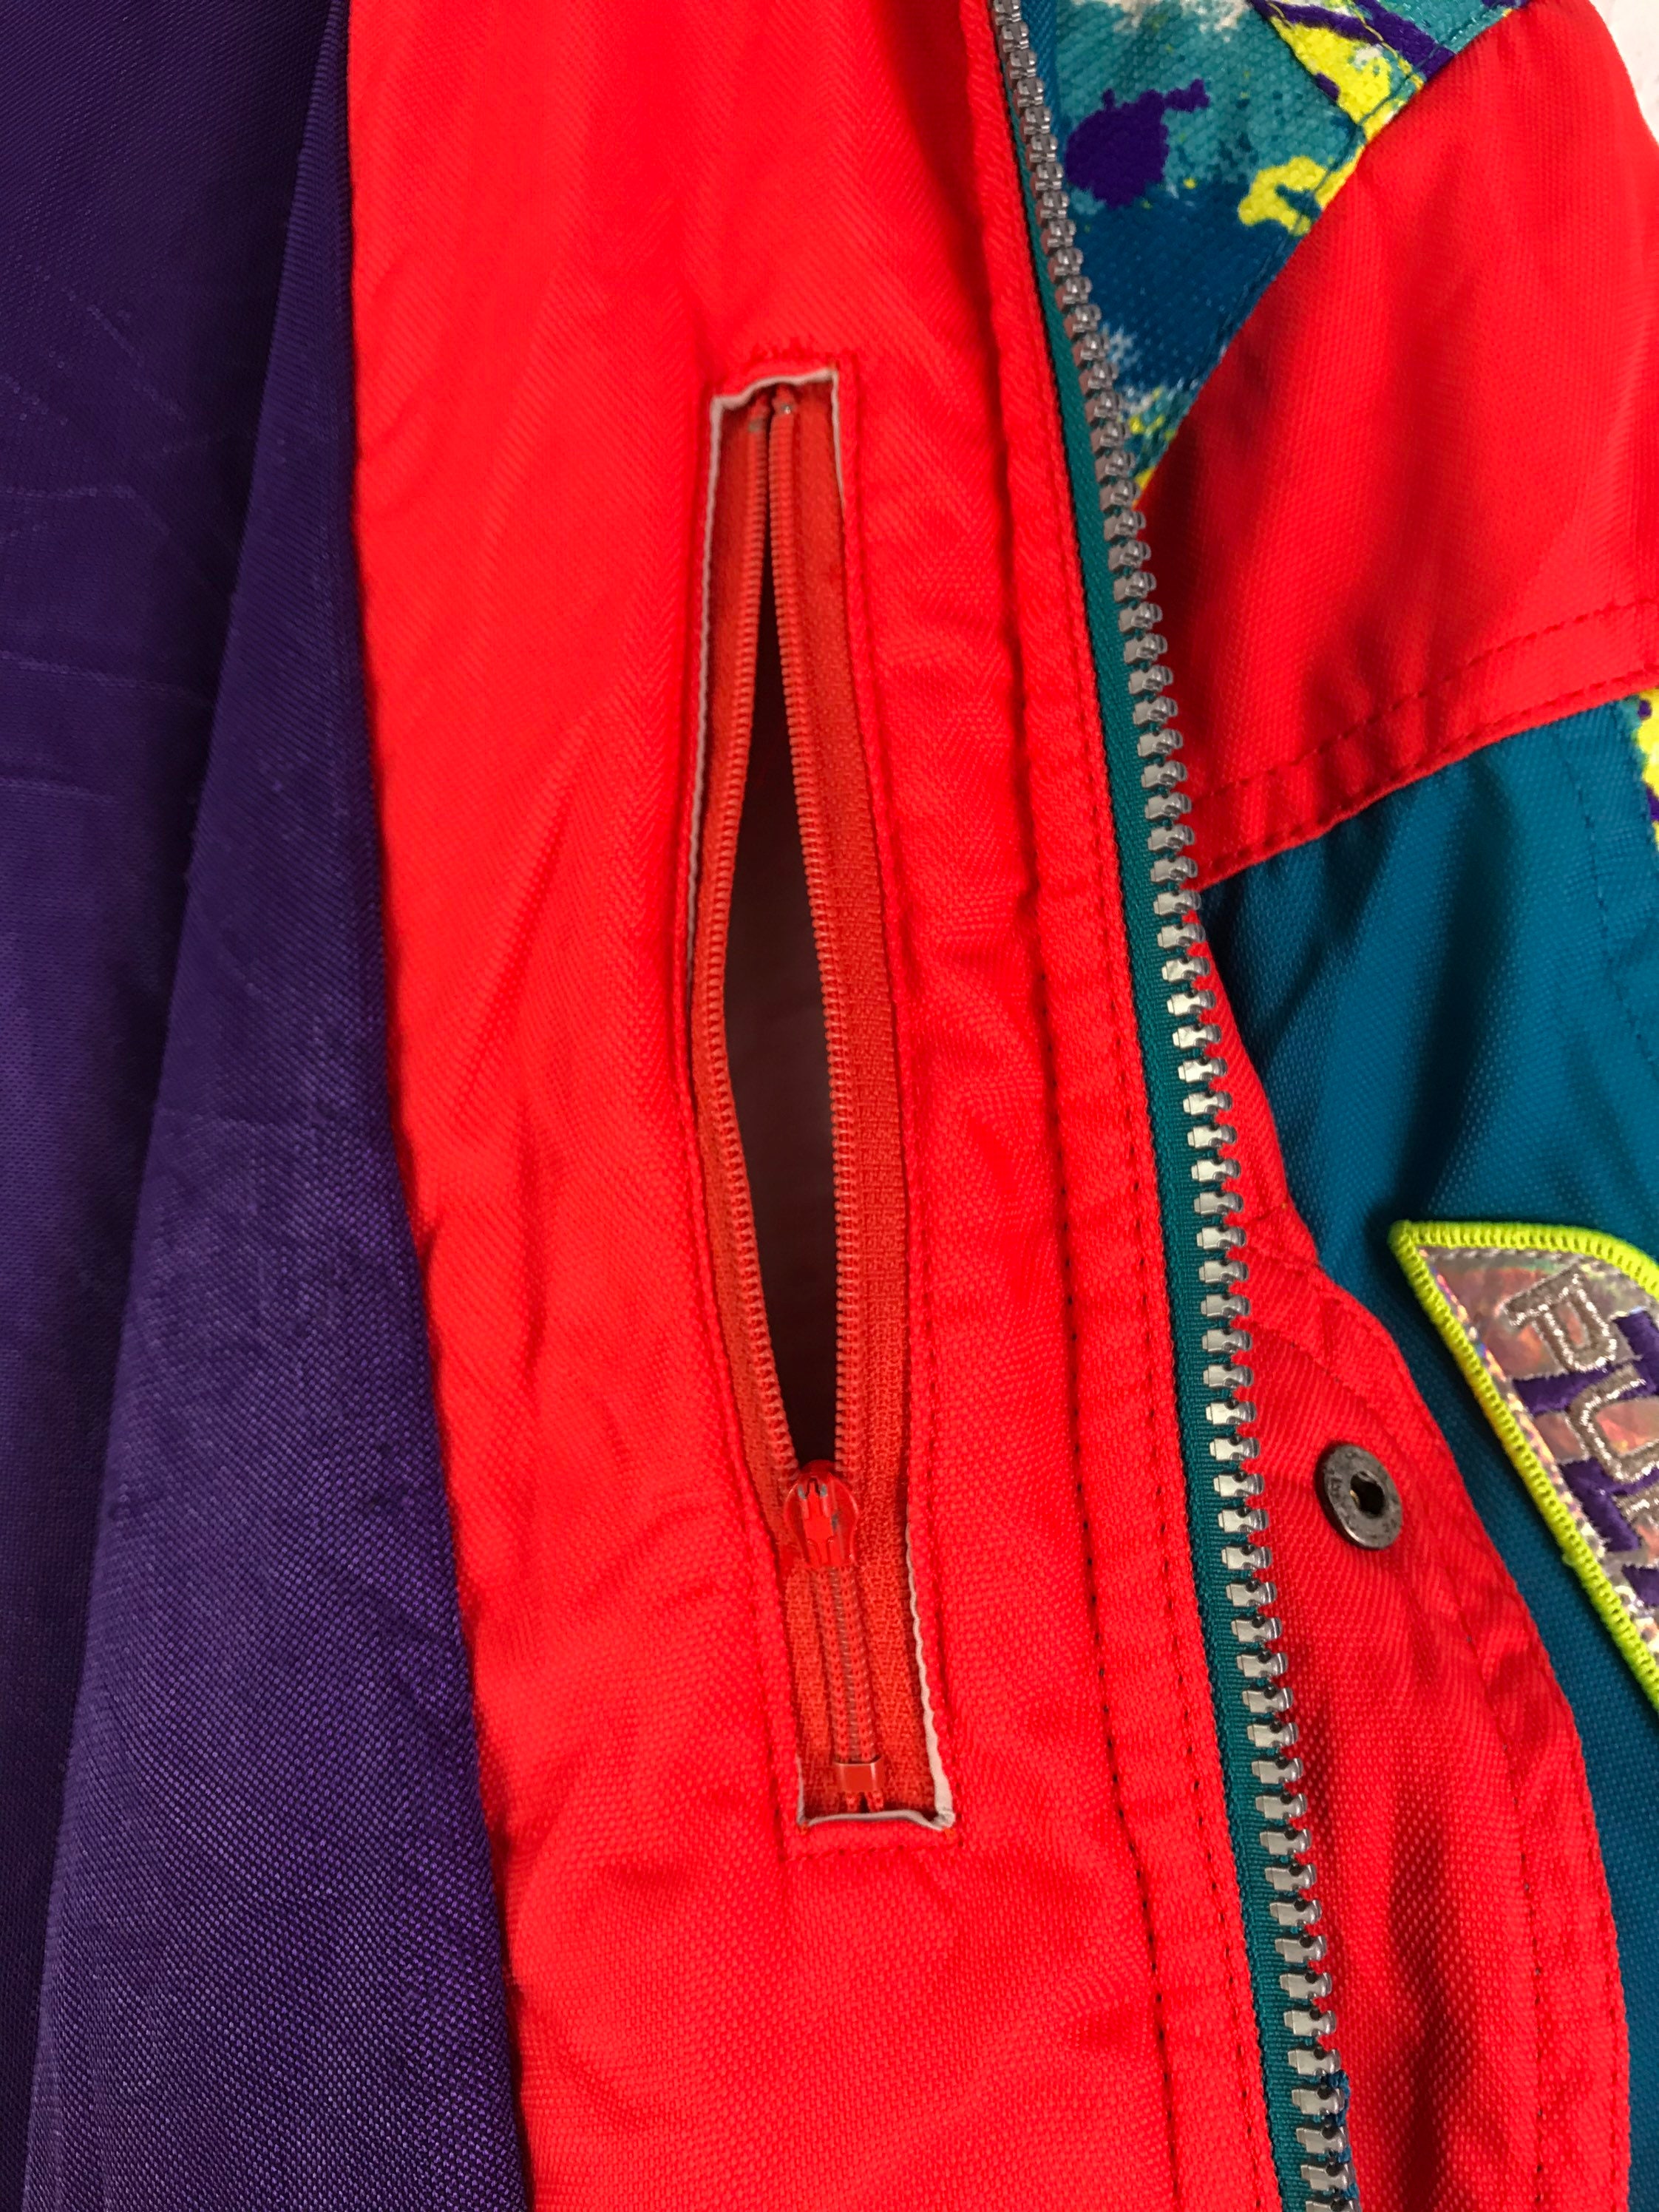 Japanese Brand Purser Ski Wear Multicolour Ski Jacket Outdoor | Etsy